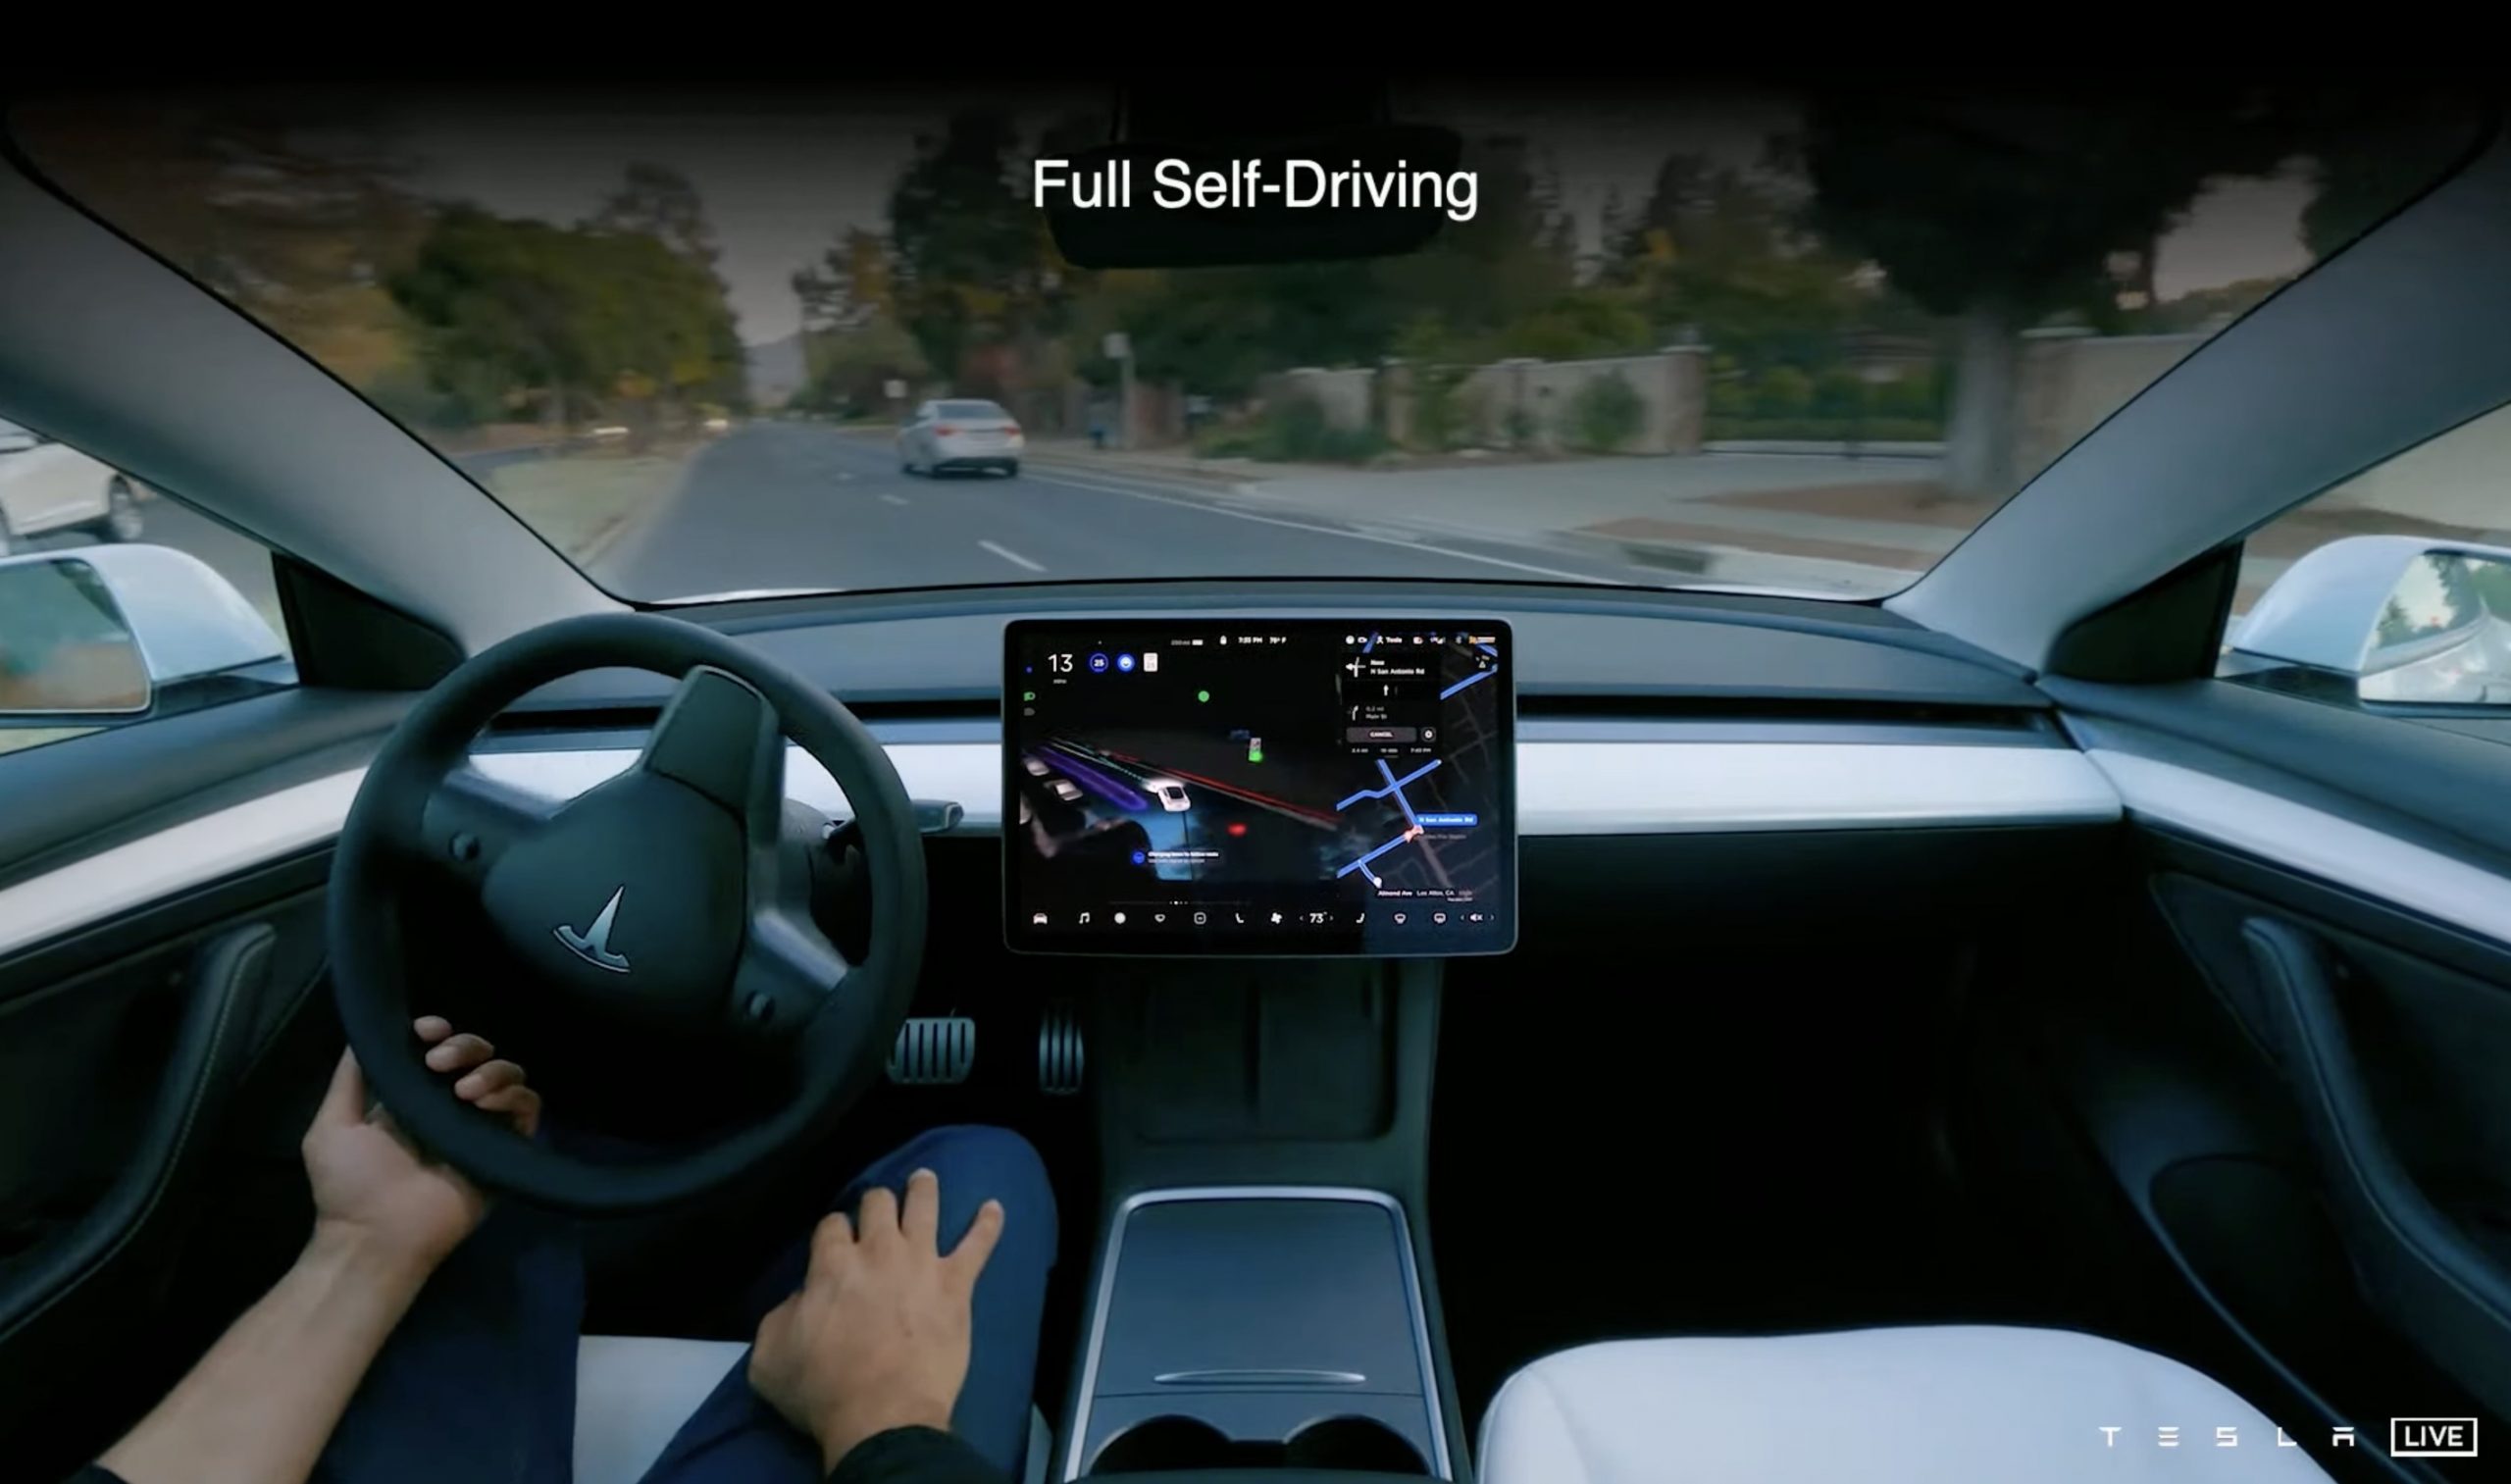 Tesla to raise Full Self-Driving price by $2,000, bringing price to $12k